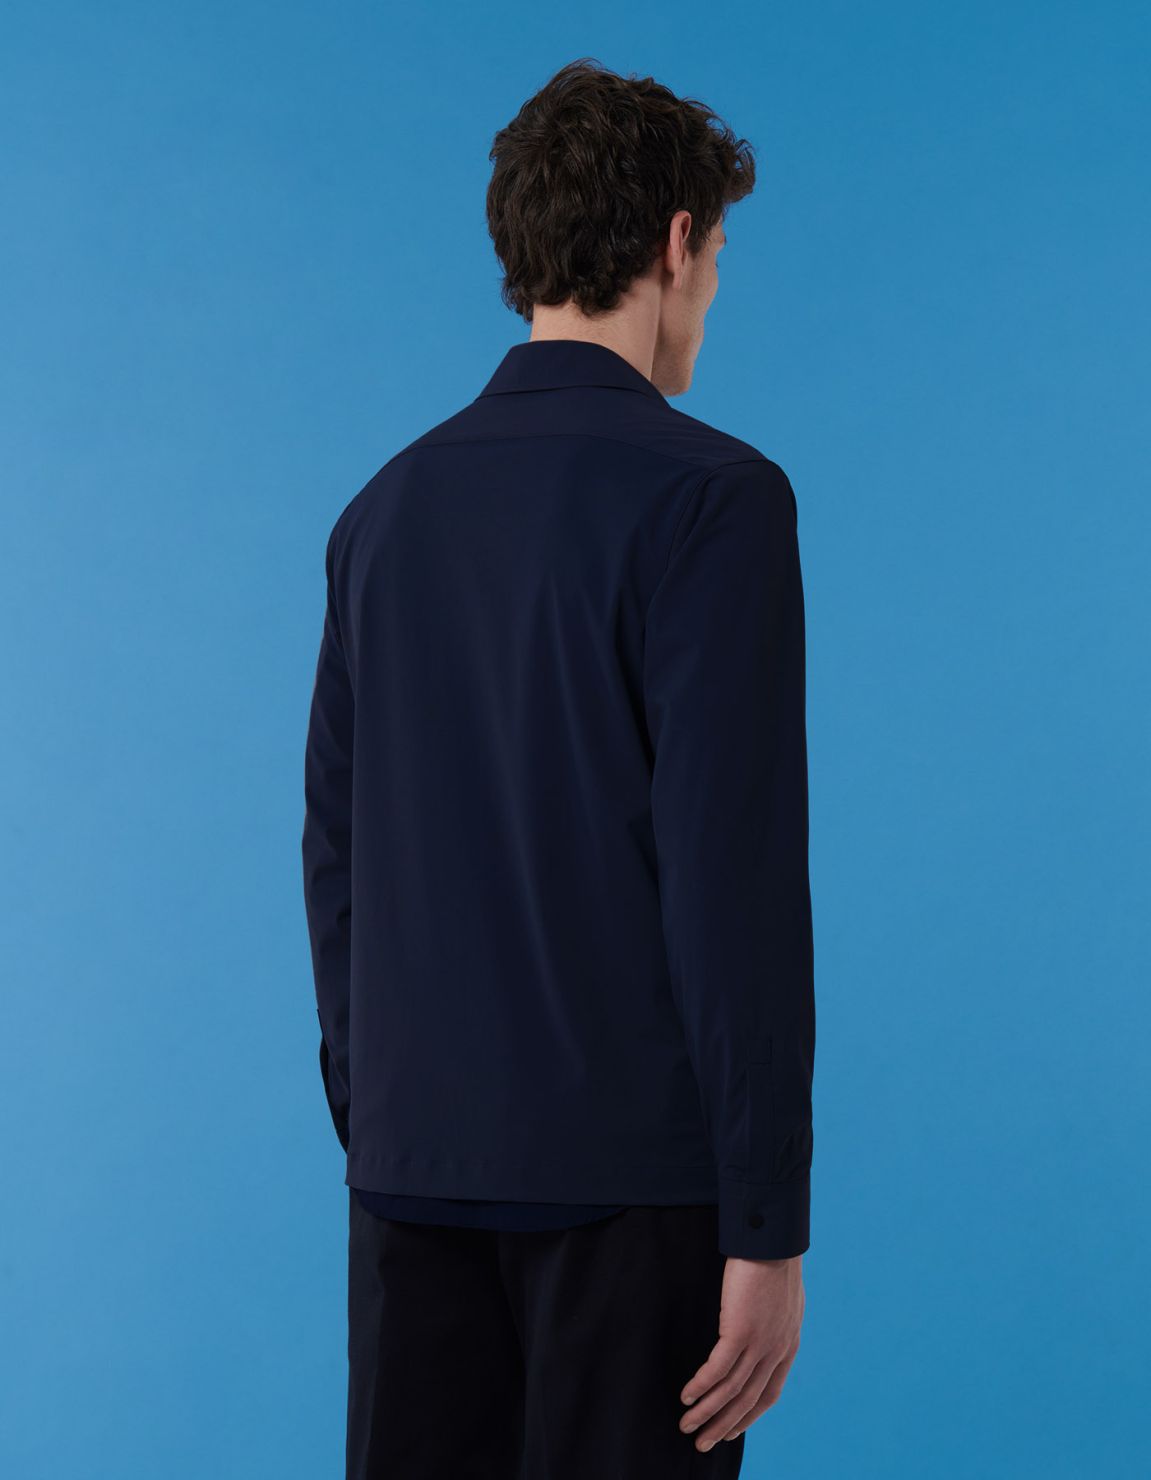 Dark Blue Textured Solid colour Shirt Collar spread Over 7